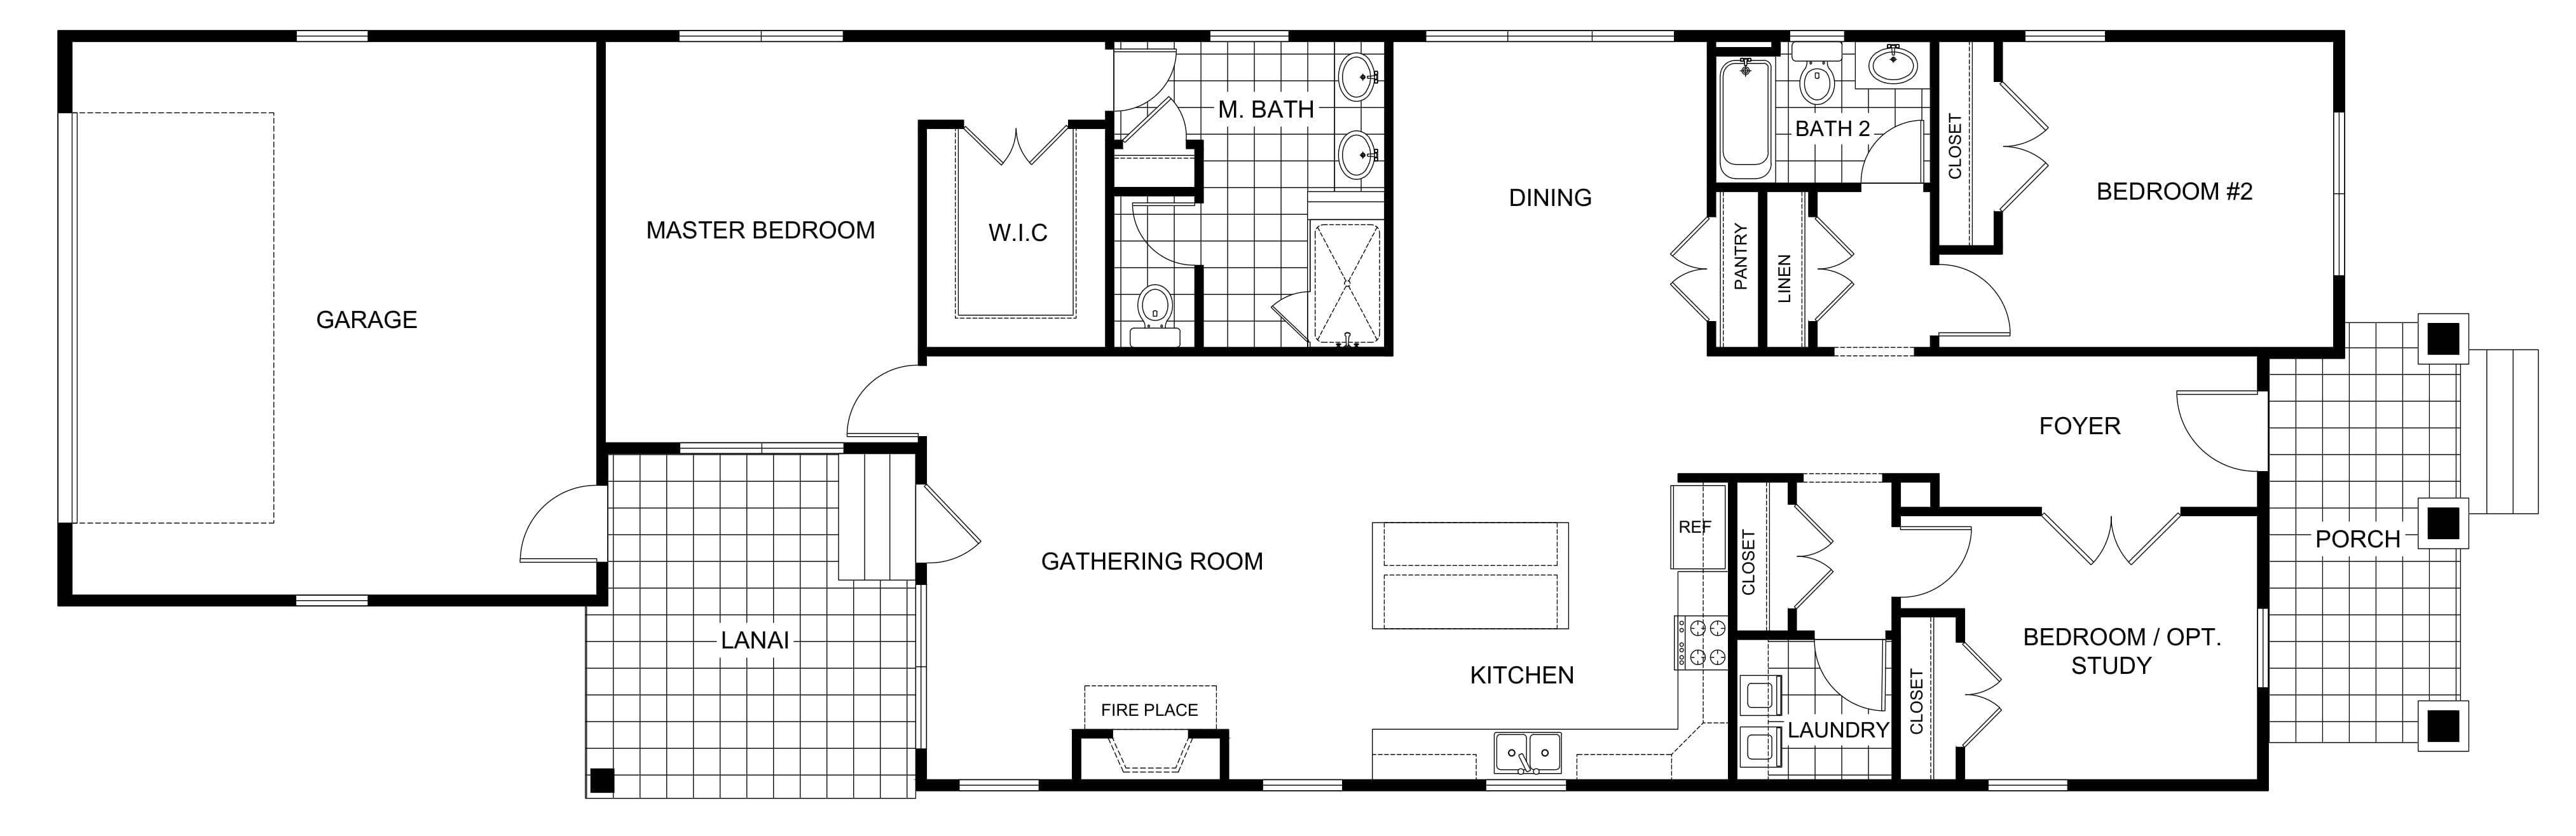 2D Floor Plan Design / Rendering Samples / Examples